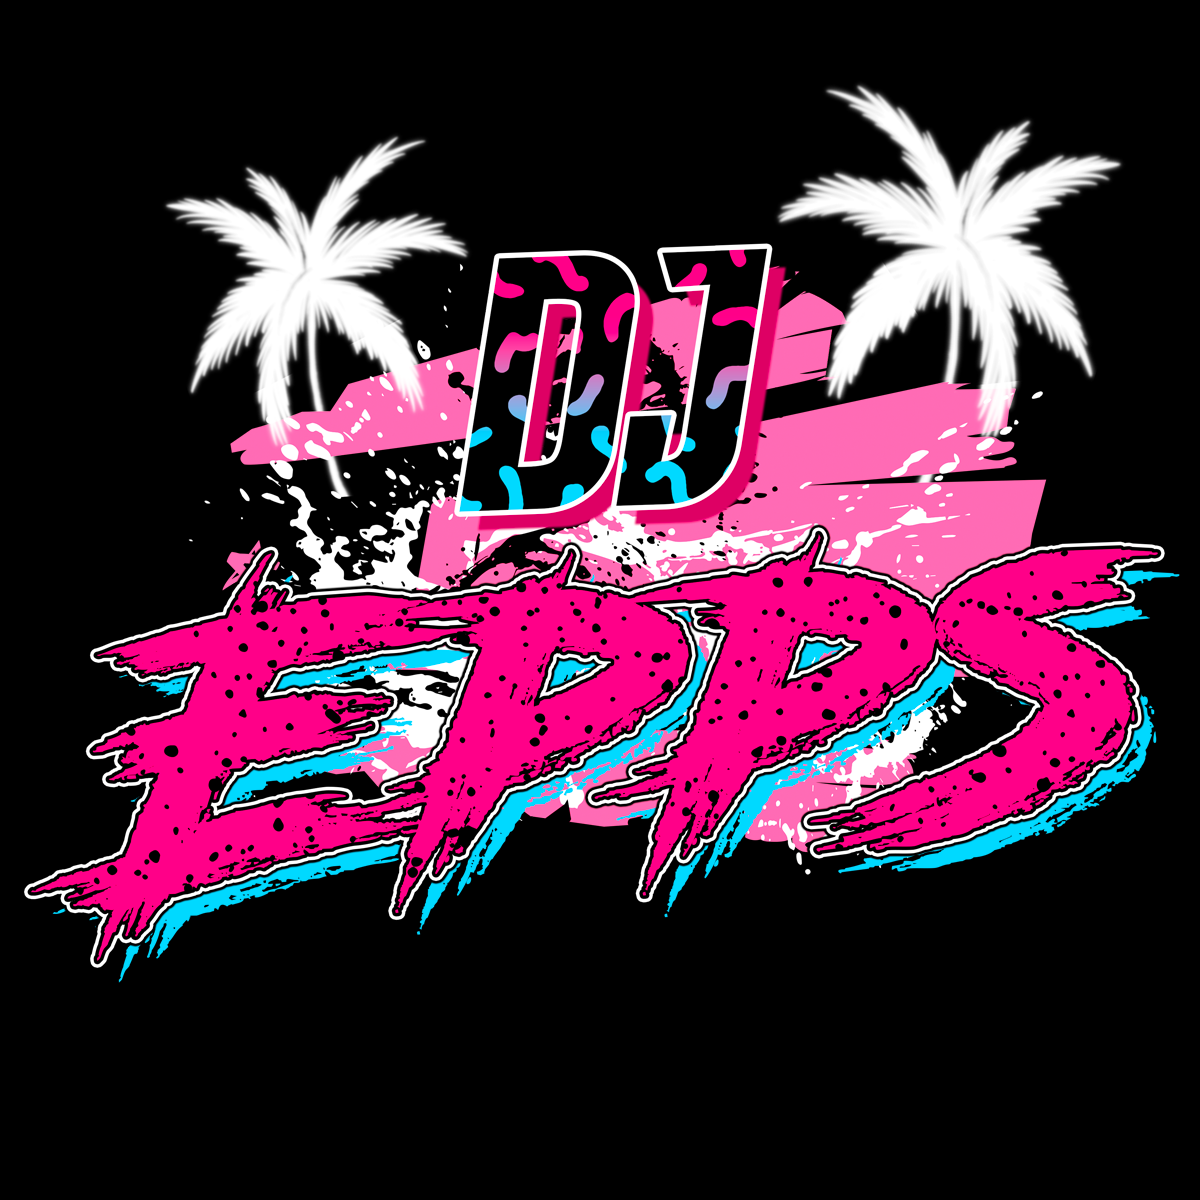 DJ EPPS - Miami Vice